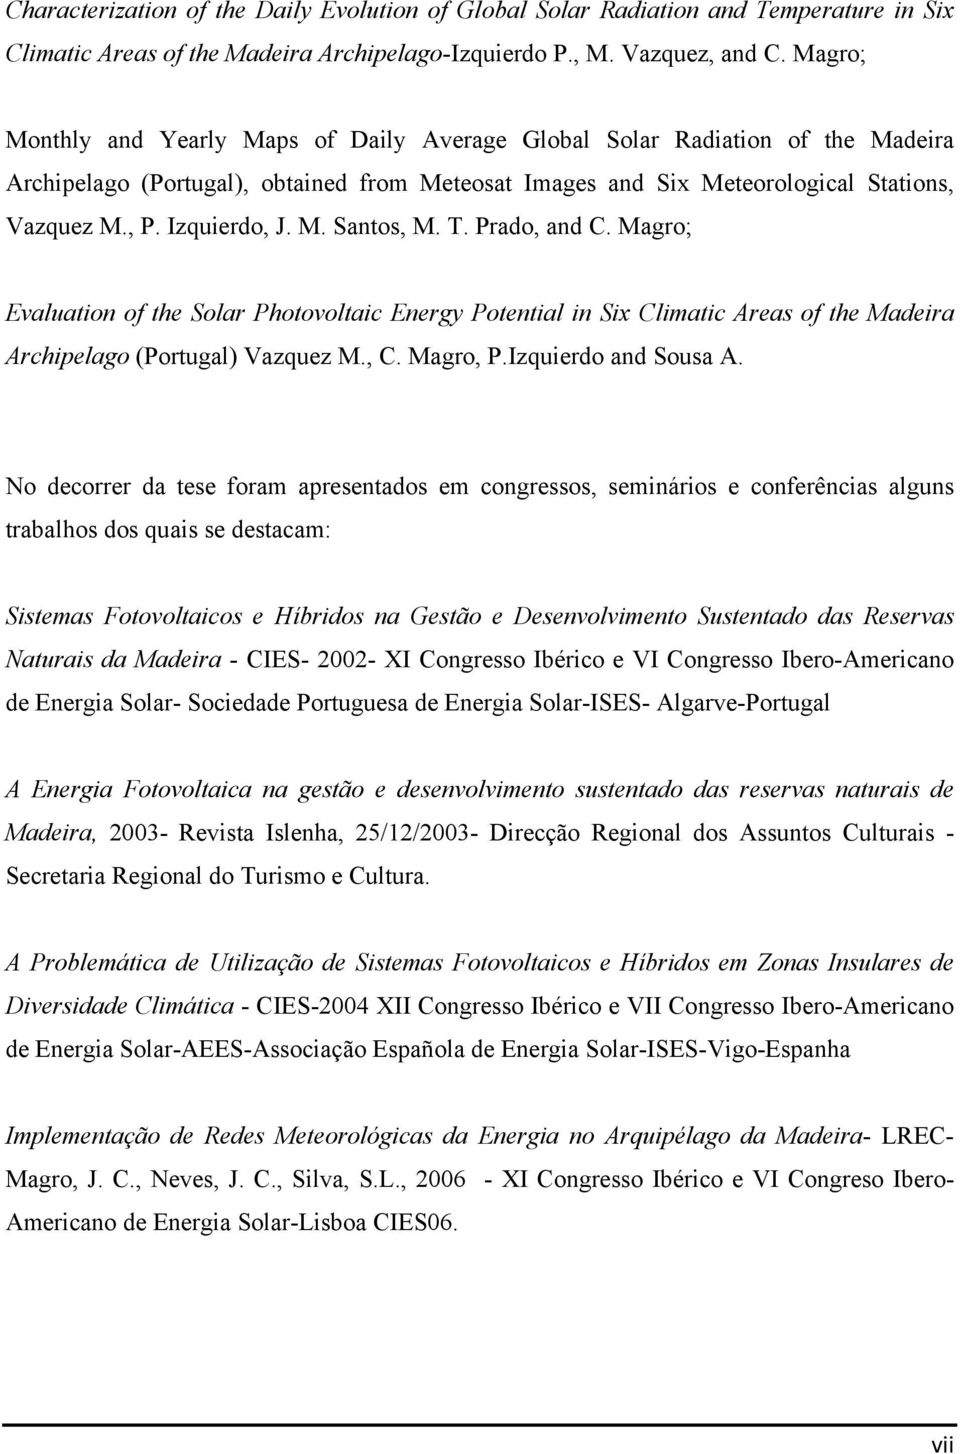 Izquierdo, J. M. Santos, M. T. Prado, and C. Magro; Evaluation of the Solar Photovoltaic Energy Potential in Six Climatic Areas of the Madeira Archipelago (Portugal) Vazquez M., C. Magro, P.